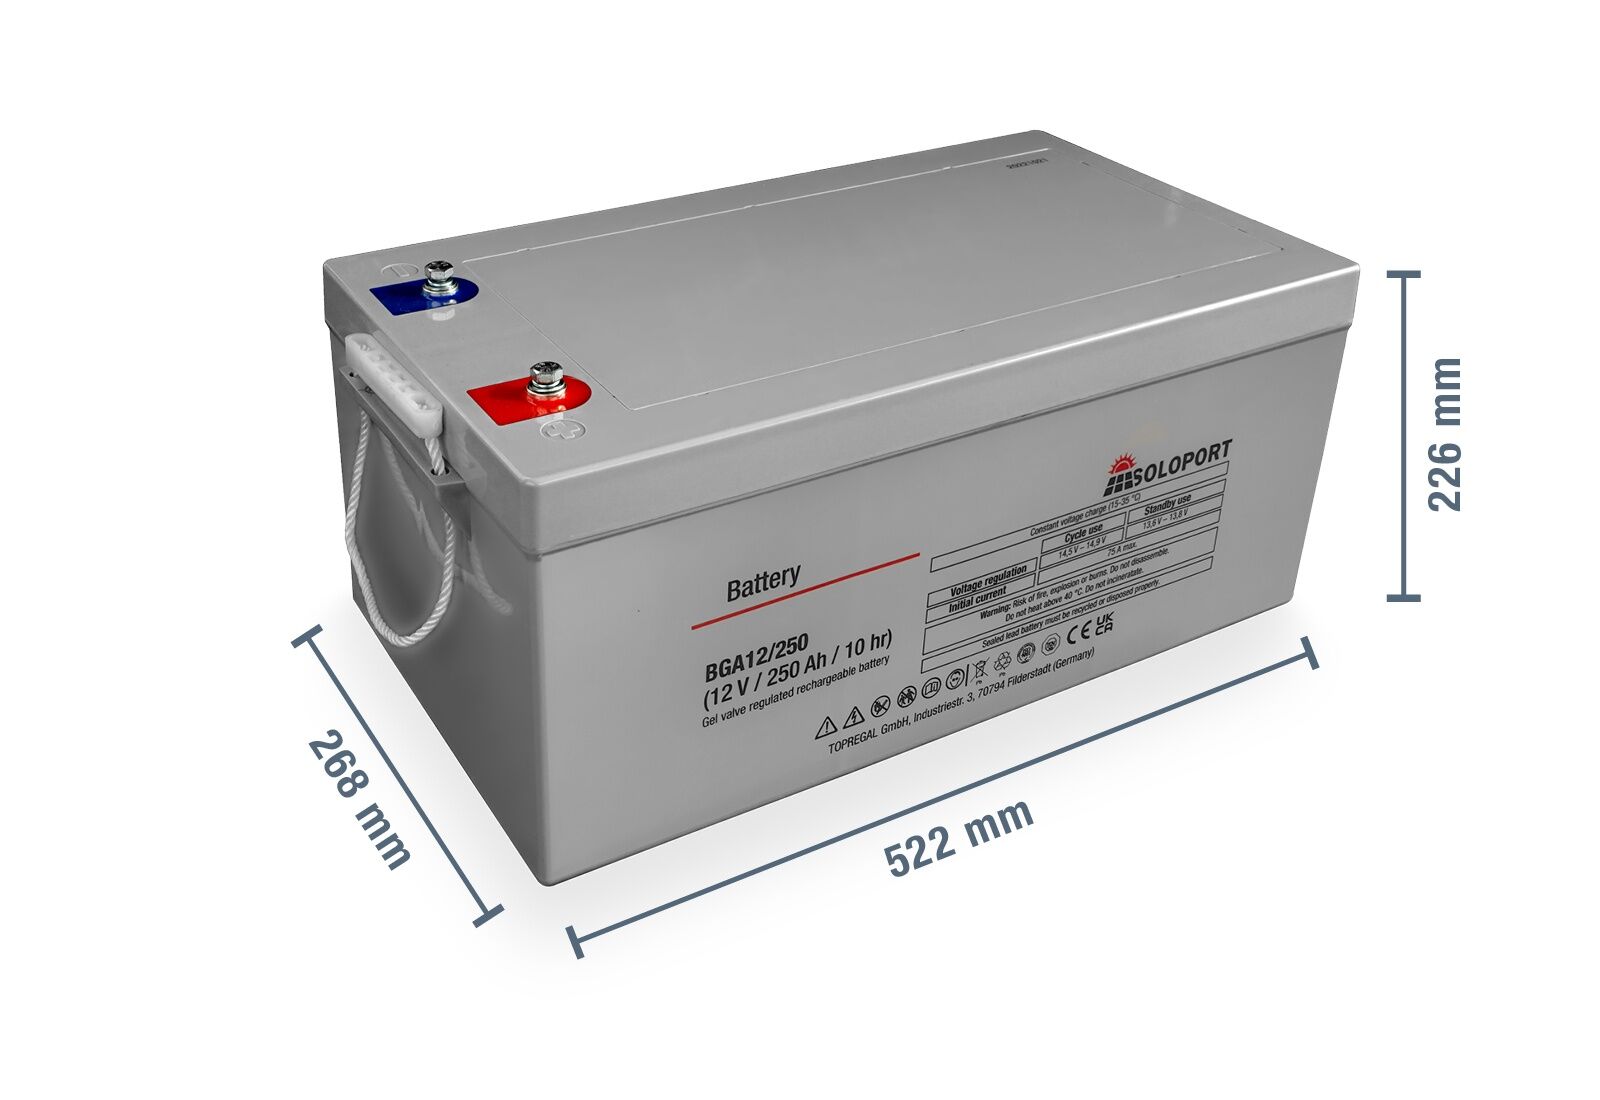 1 x Batterie plomb-gel BGA12/250, 12 V, 250 Ah, SoloPort